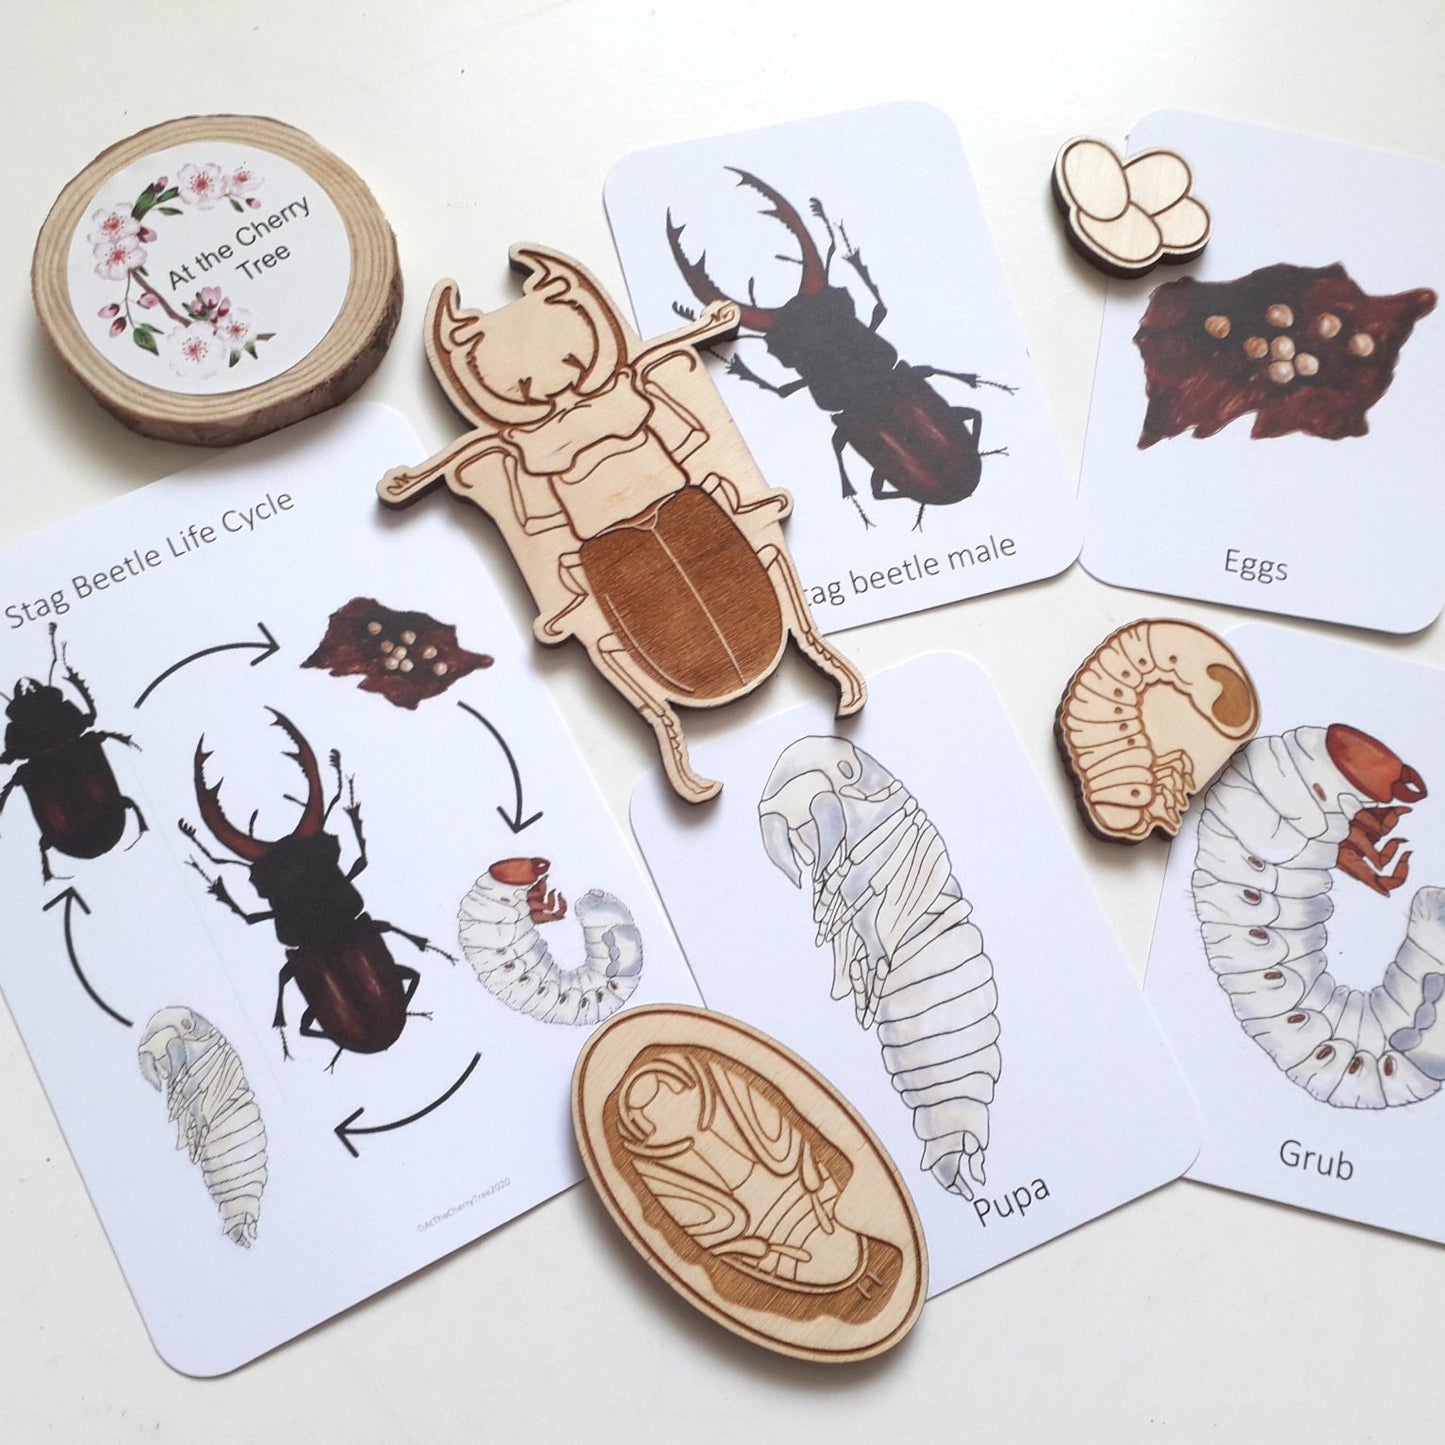 Stag beetle lifecycle set - Printed